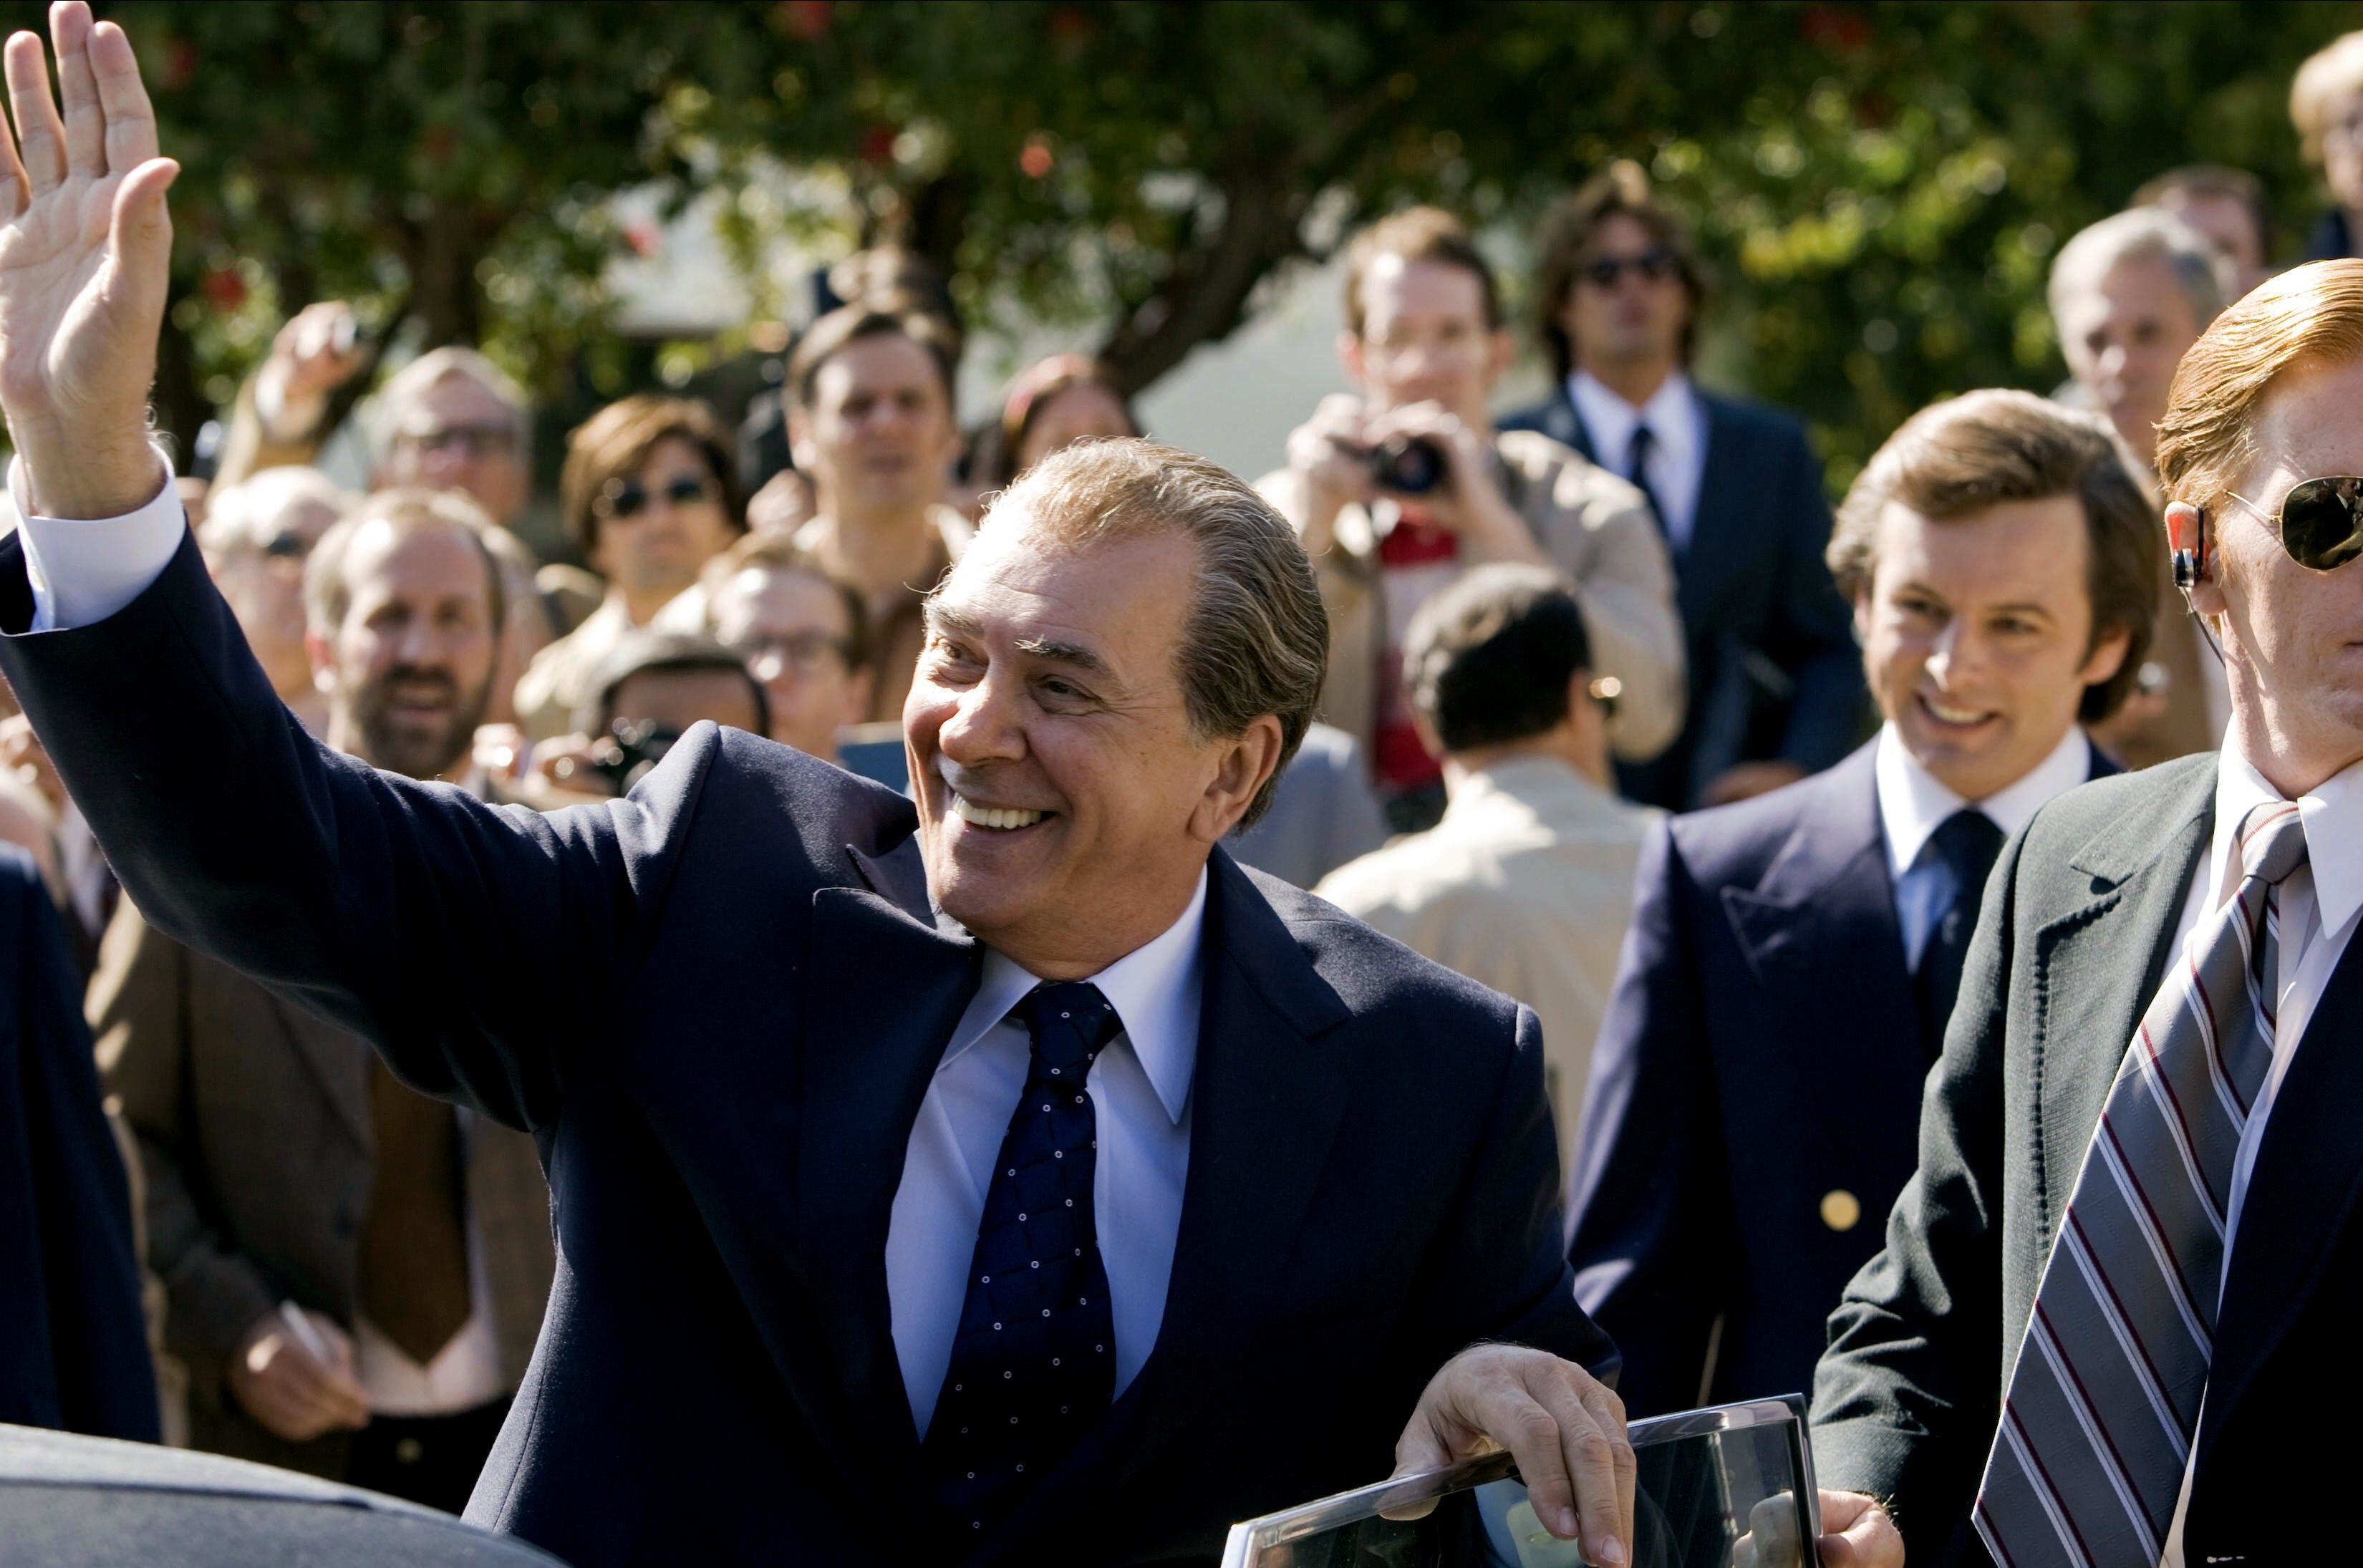 Frank as Nixon waving